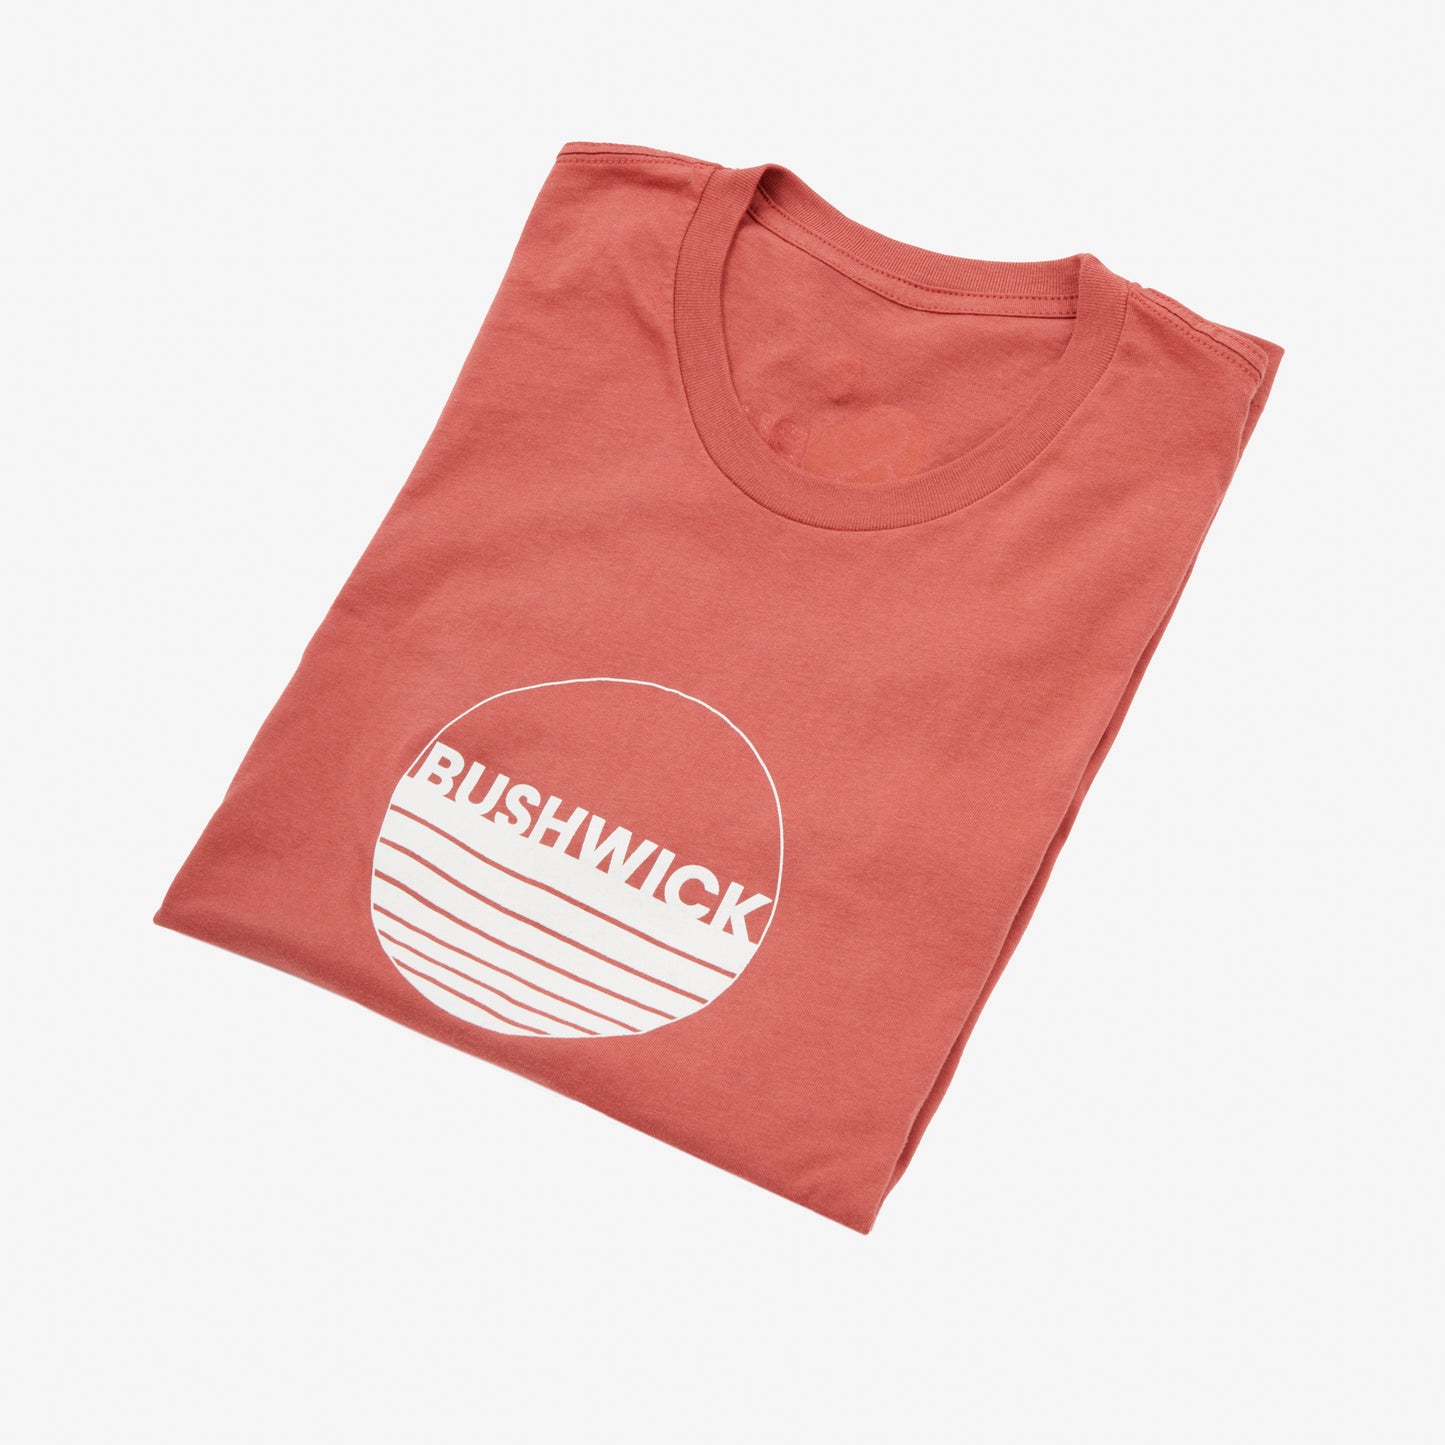 Bushwick Unisex T-Shirt